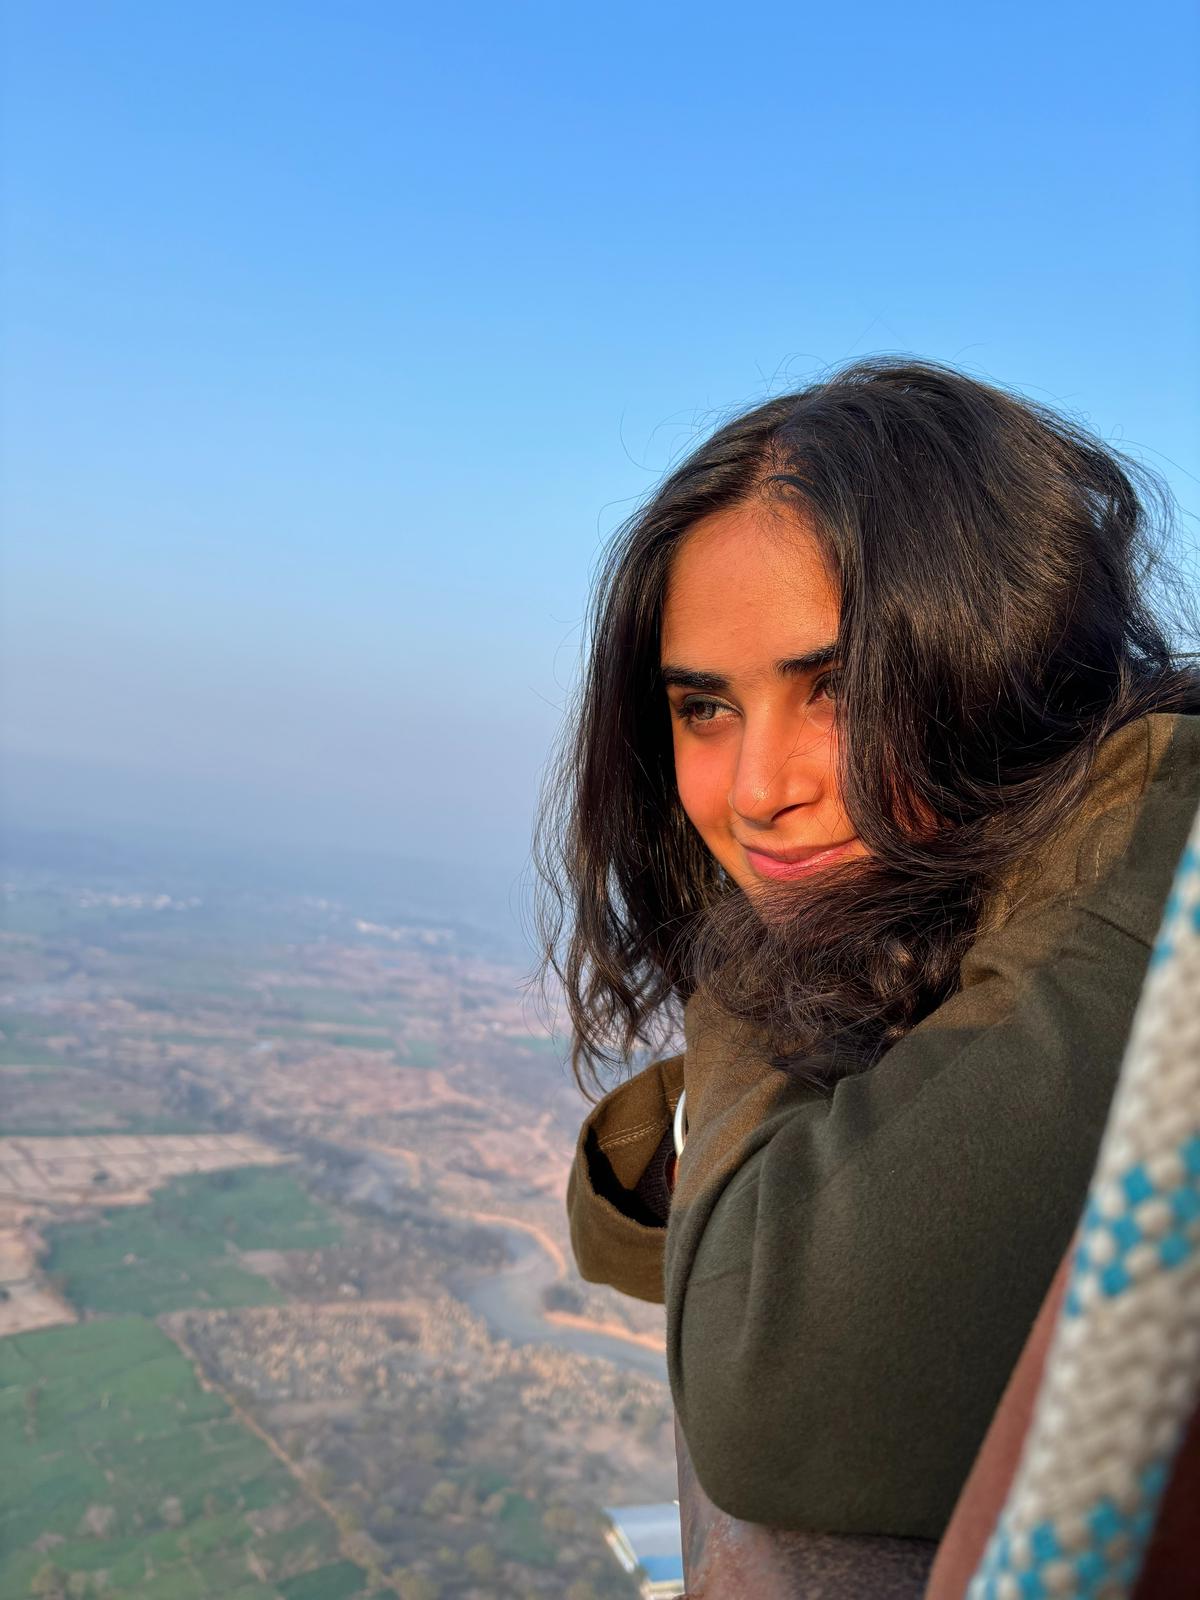 Ishmita Marya took her first hot air balloon ride in Pinjore